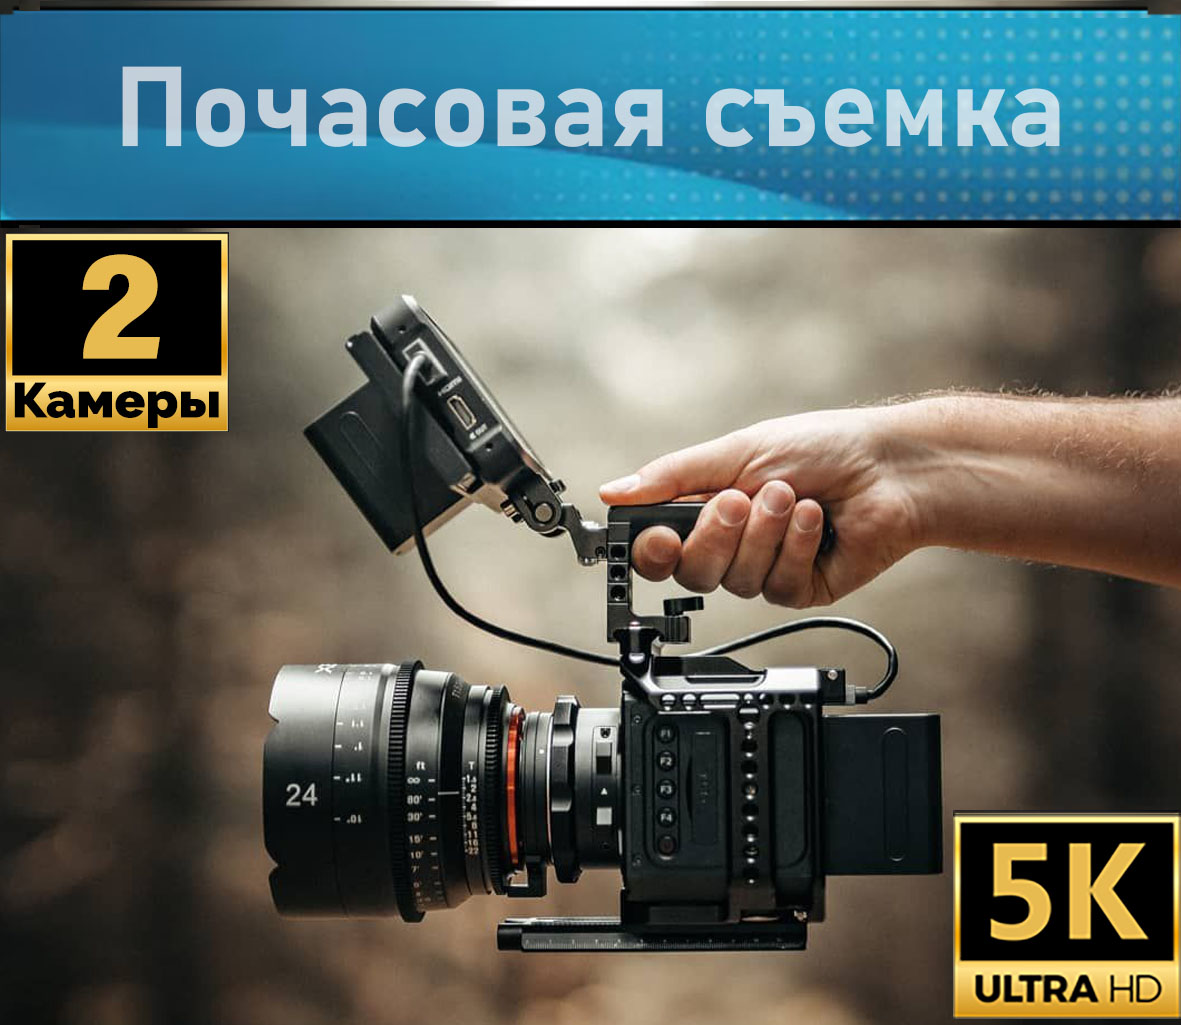 Видеосъемка 5К цена 2 камеры